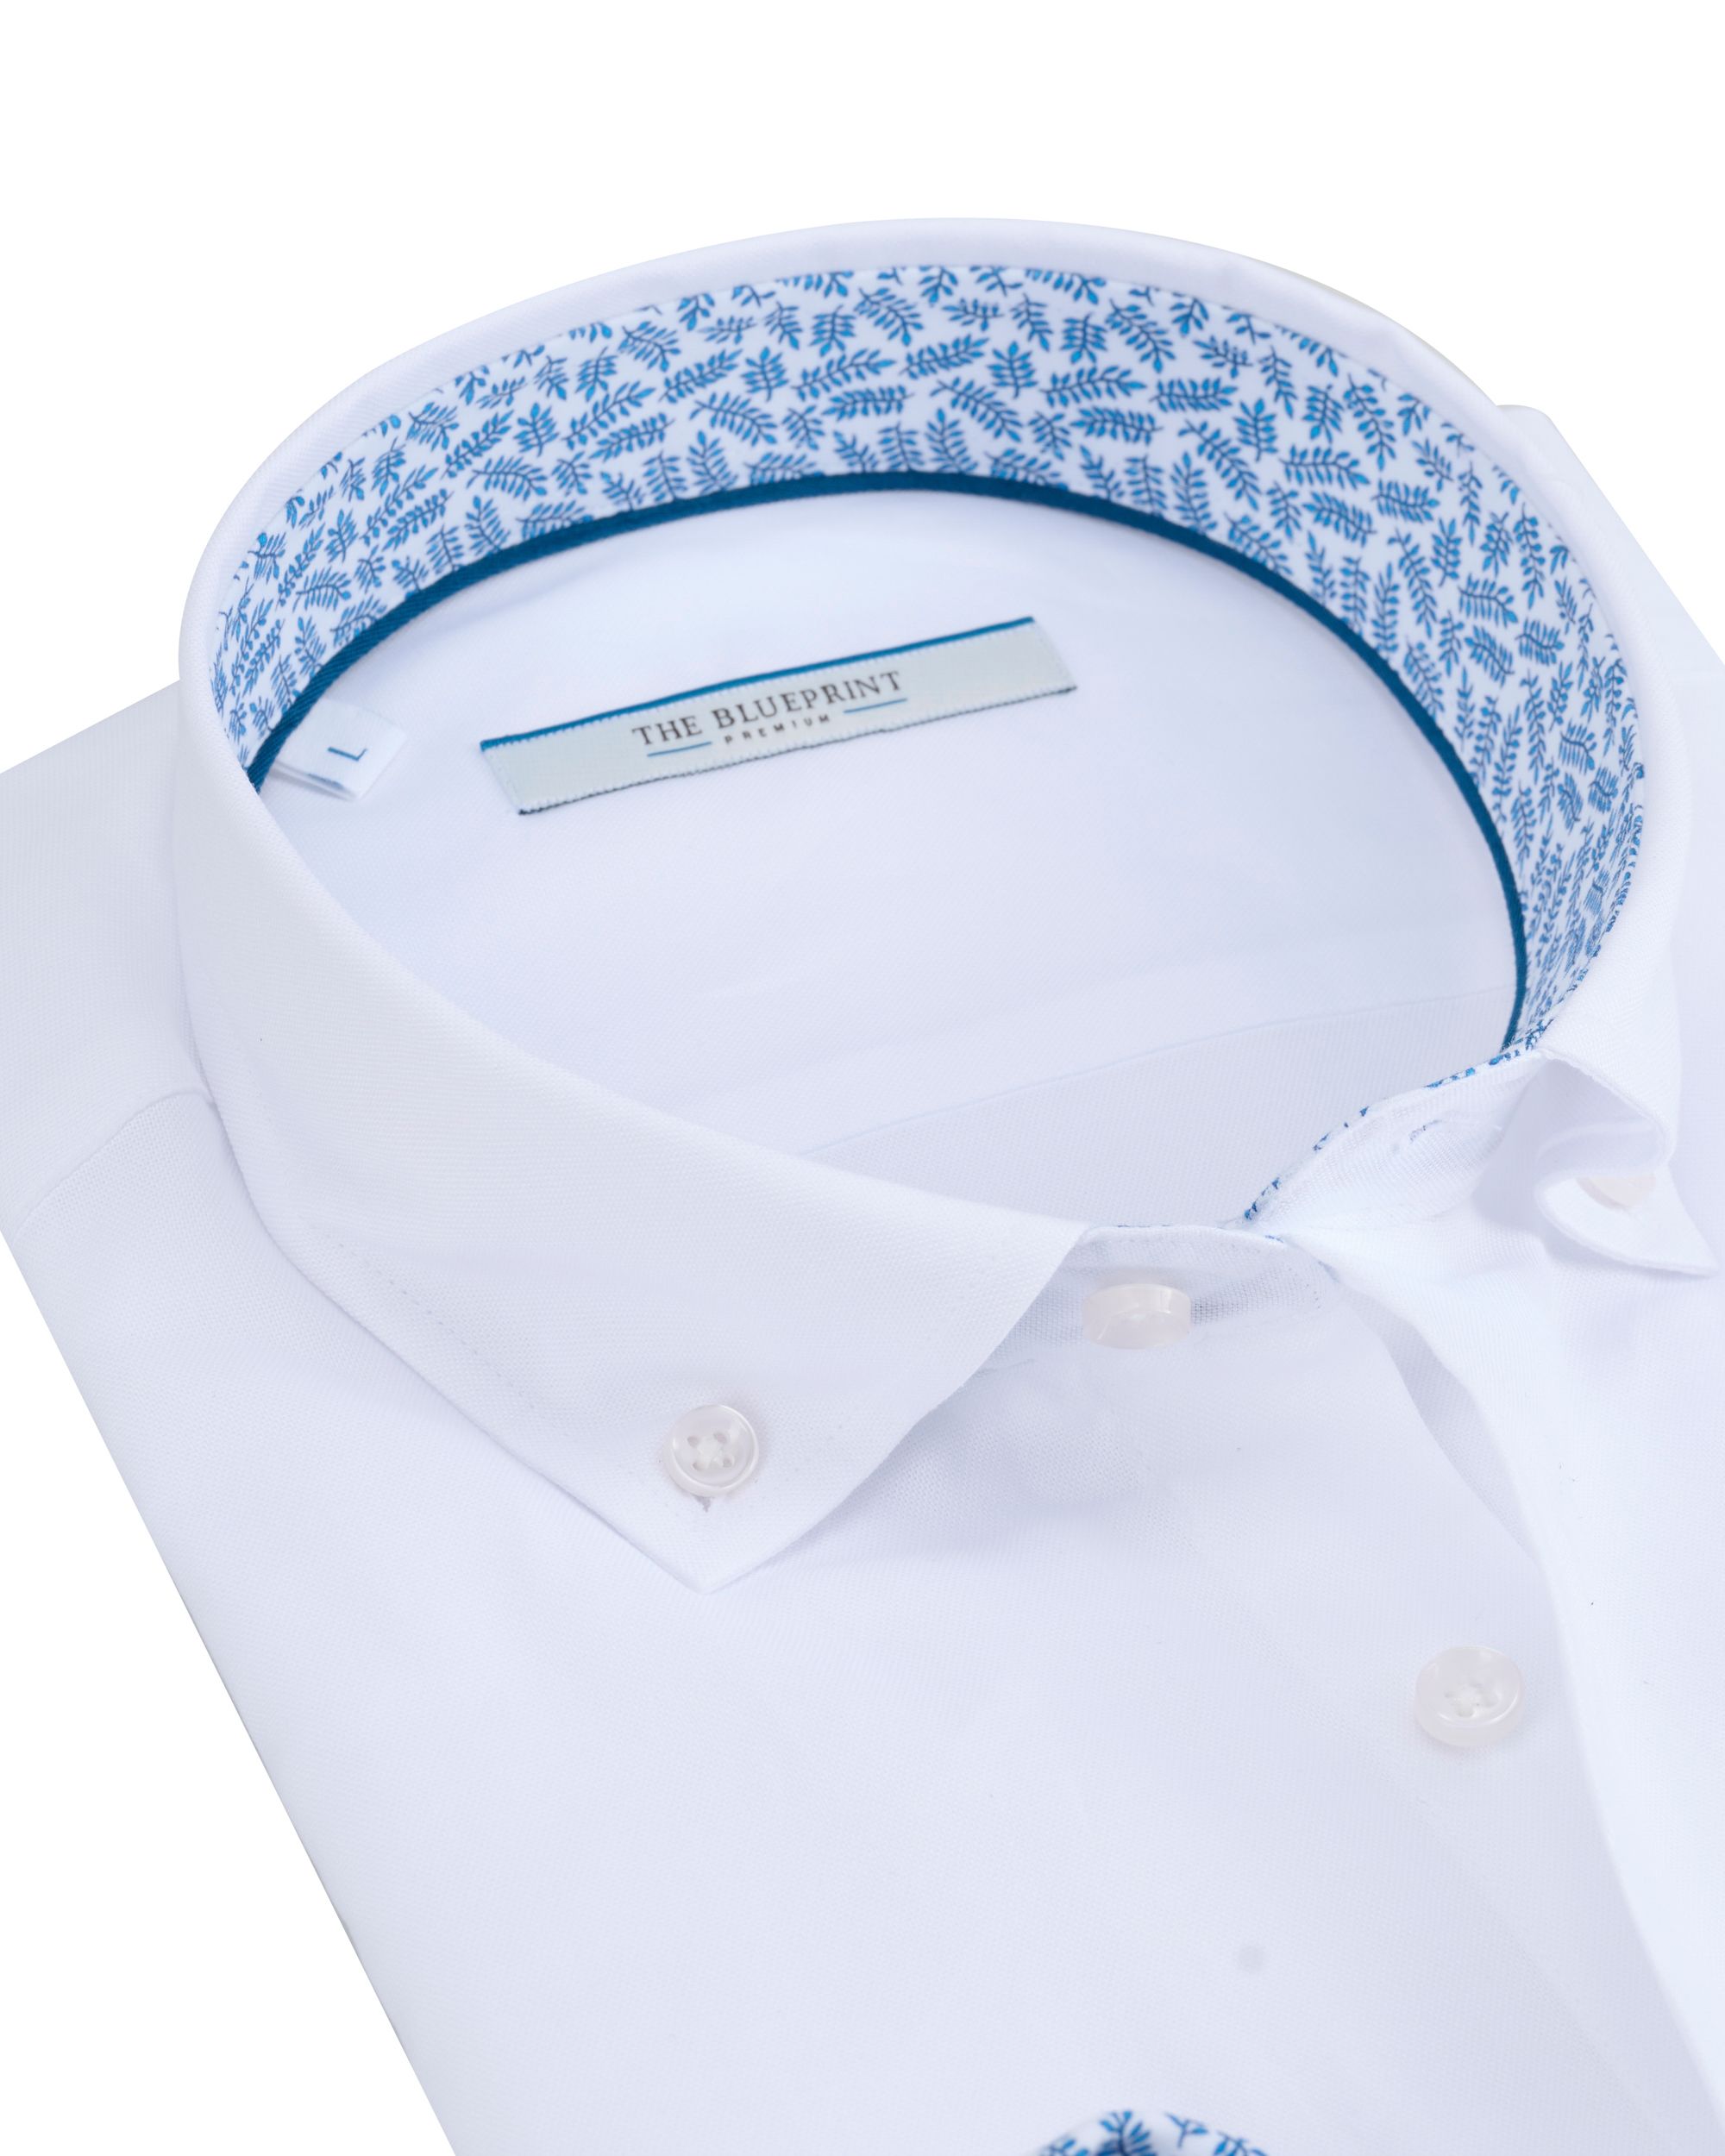 The BLUEPRINT Premium Trendy overhemd LM WHITE 084835-001-L